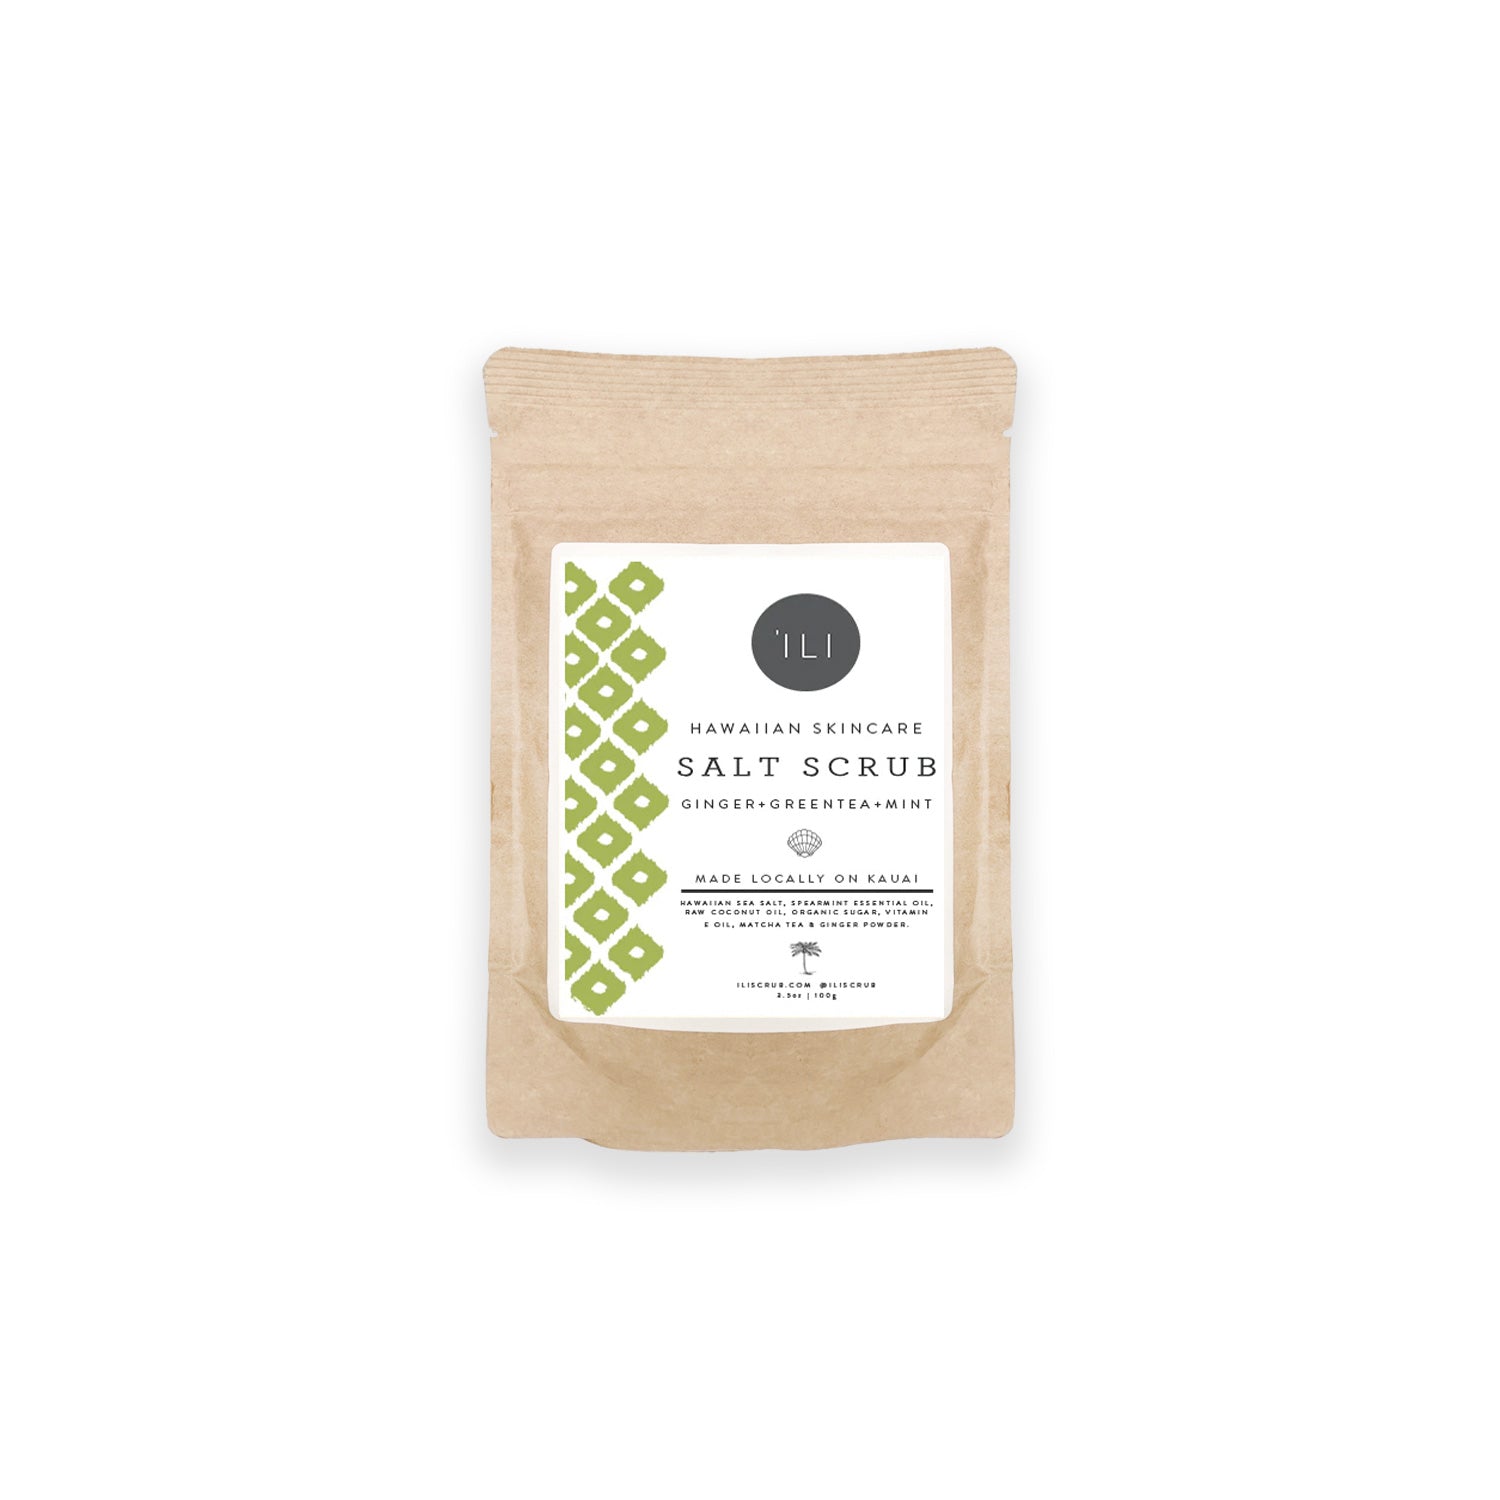 Hawaiian Skincare Salt Scrub - Ginger + Green Tea + Mint 3.5oz